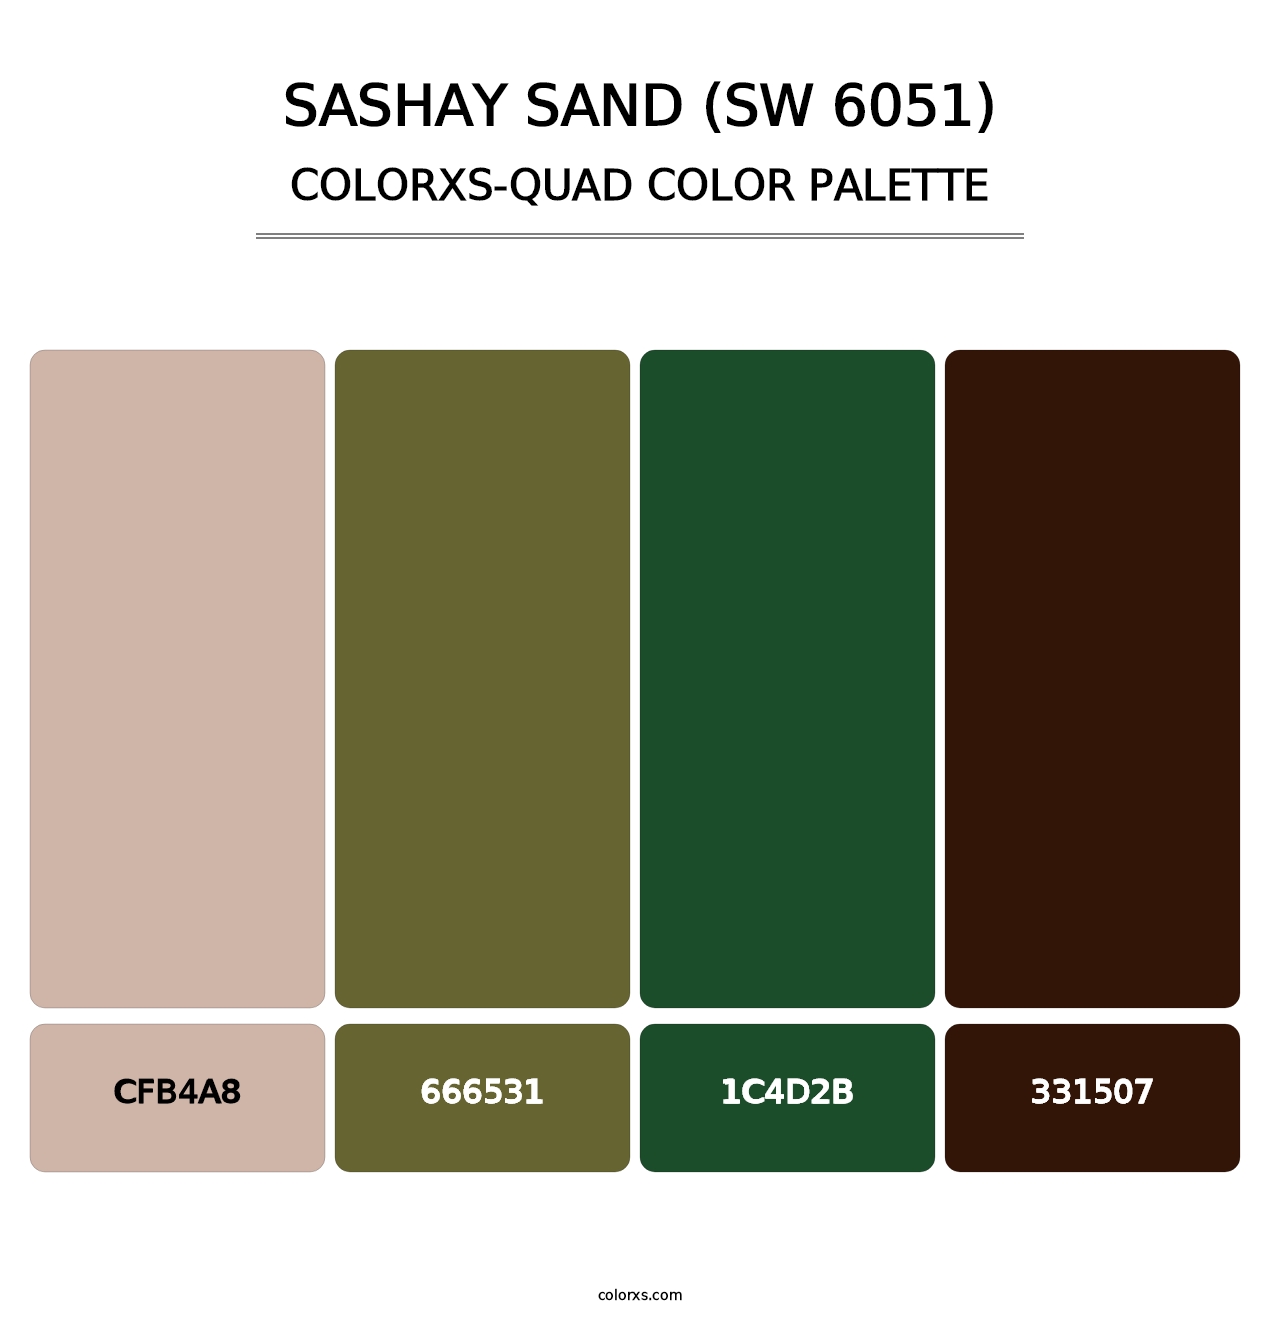 Sashay Sand (SW 6051) - Colorxs Quad Palette